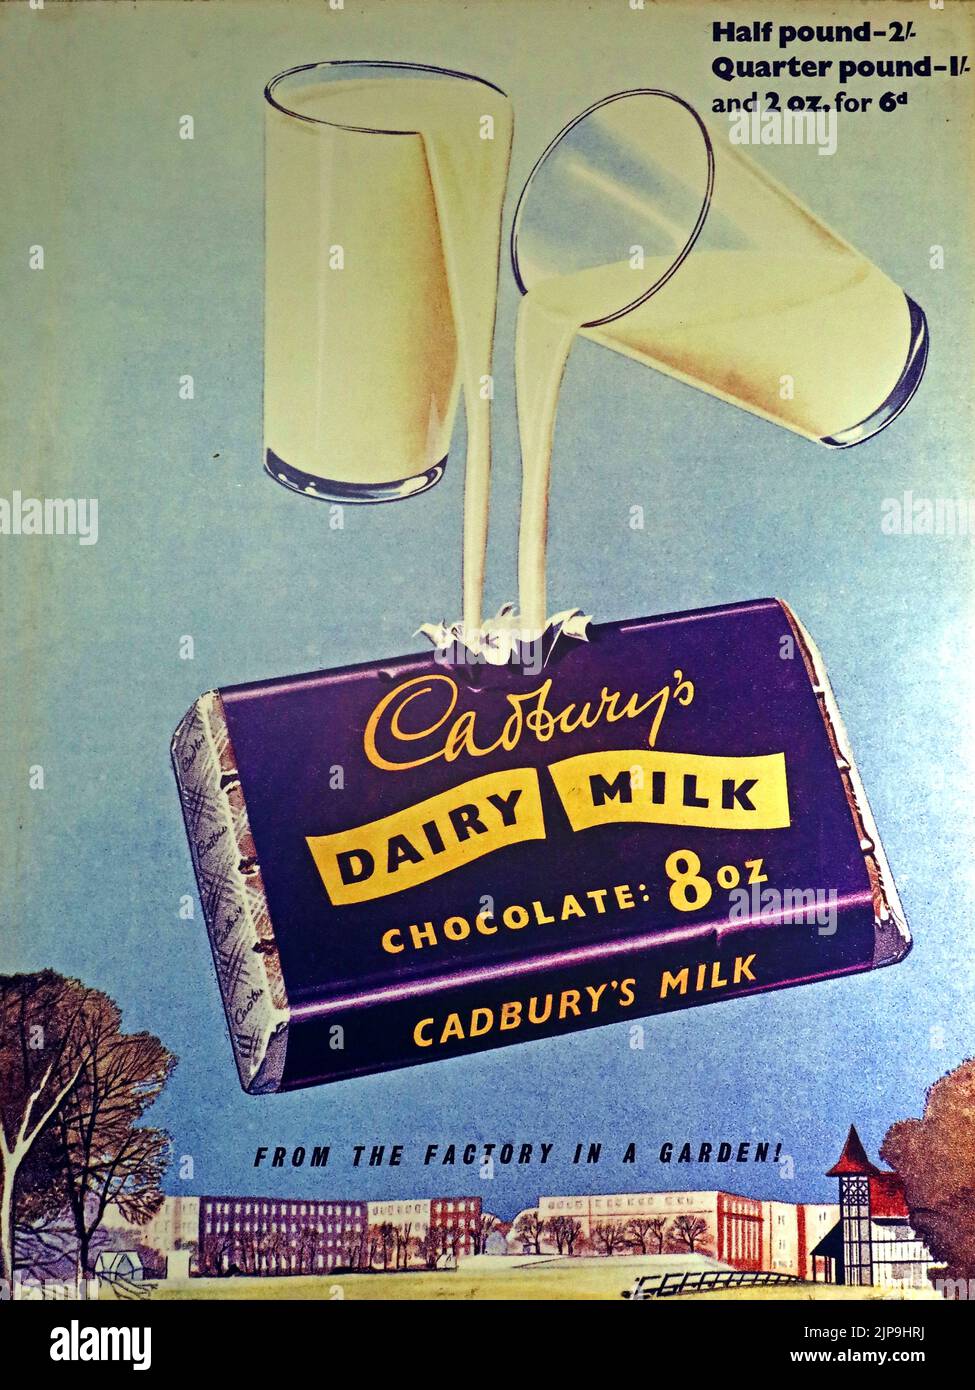 Bournville Birmingham Cadbury Dairy Milk advert - From the factory in a garden - 8oz Stock Photo